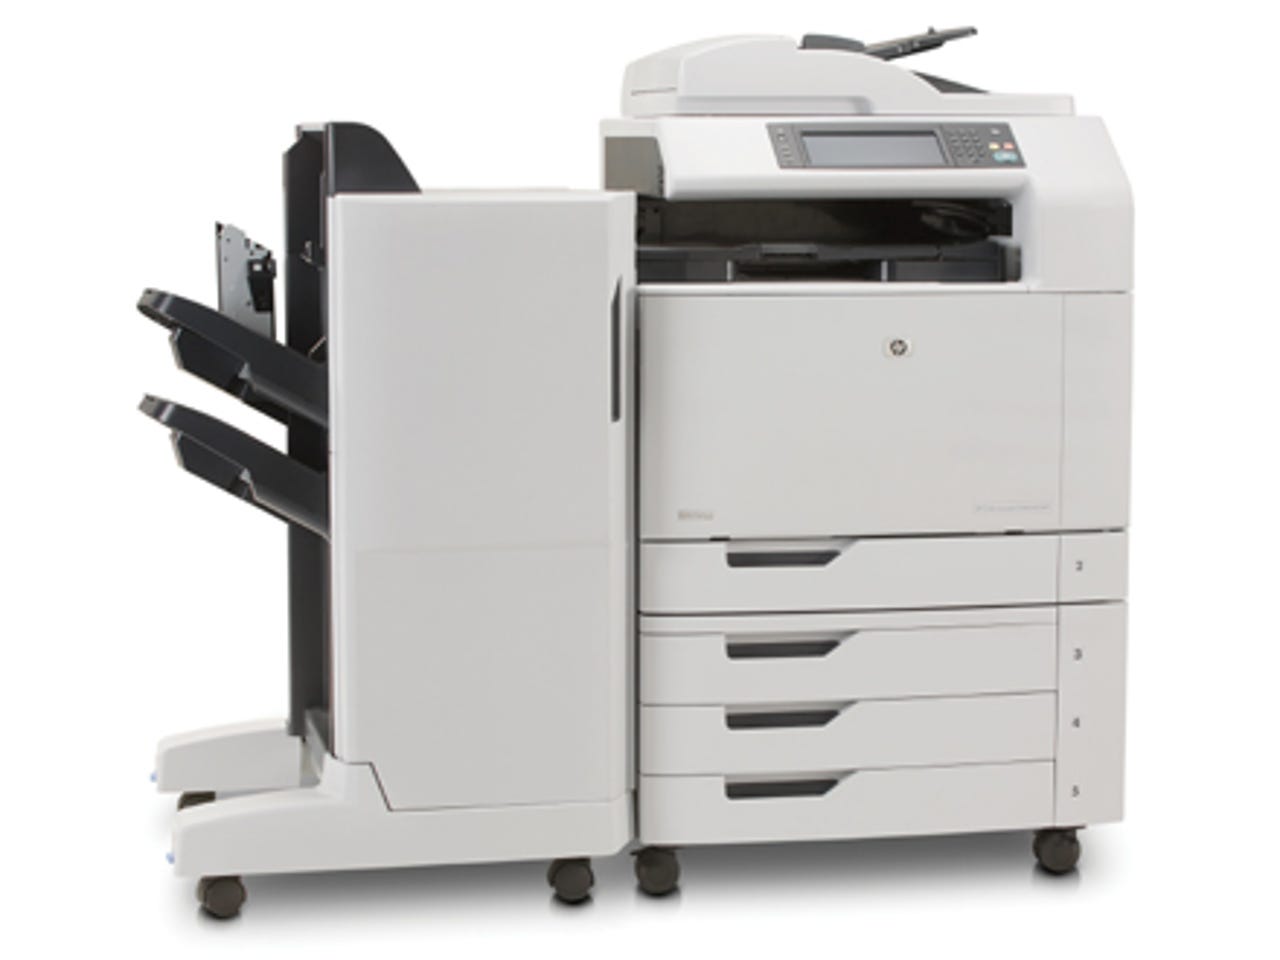 photos-hp-releases-largest-ever-printer-range15.jpg